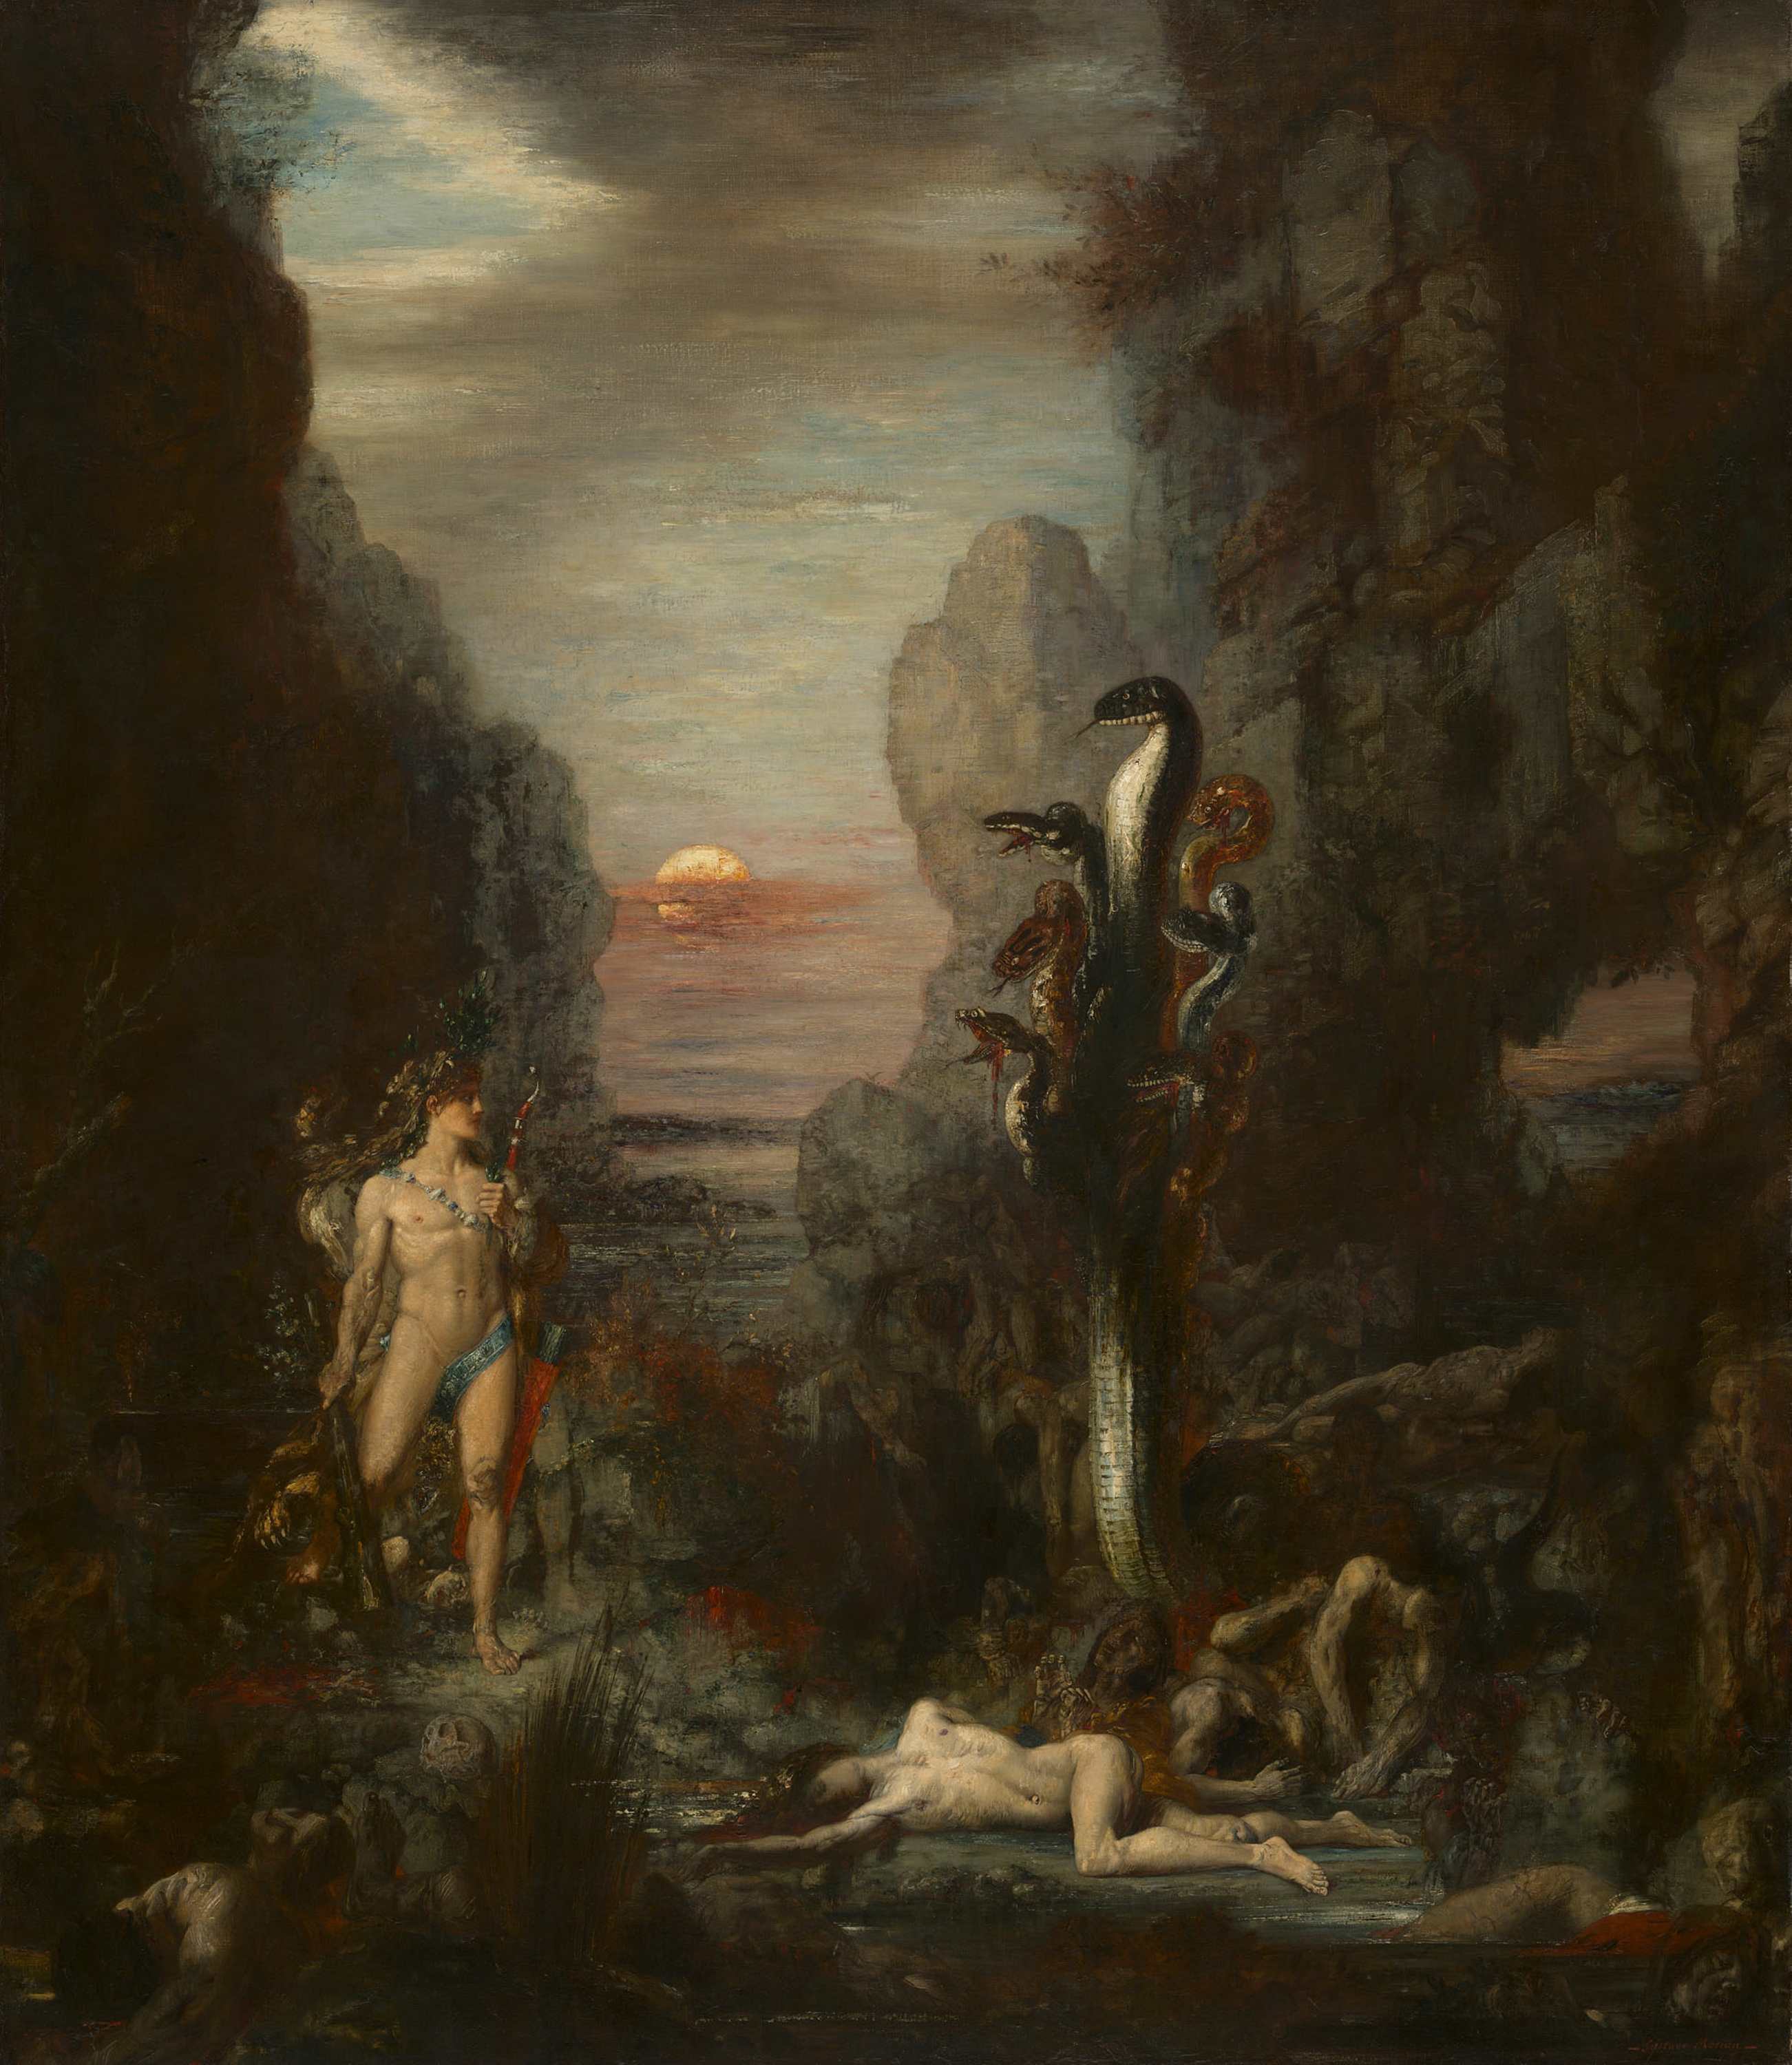 Herkules i hydra lernejska by Gustave Moreau - 1875/76 - 179,3 × 154 cm 